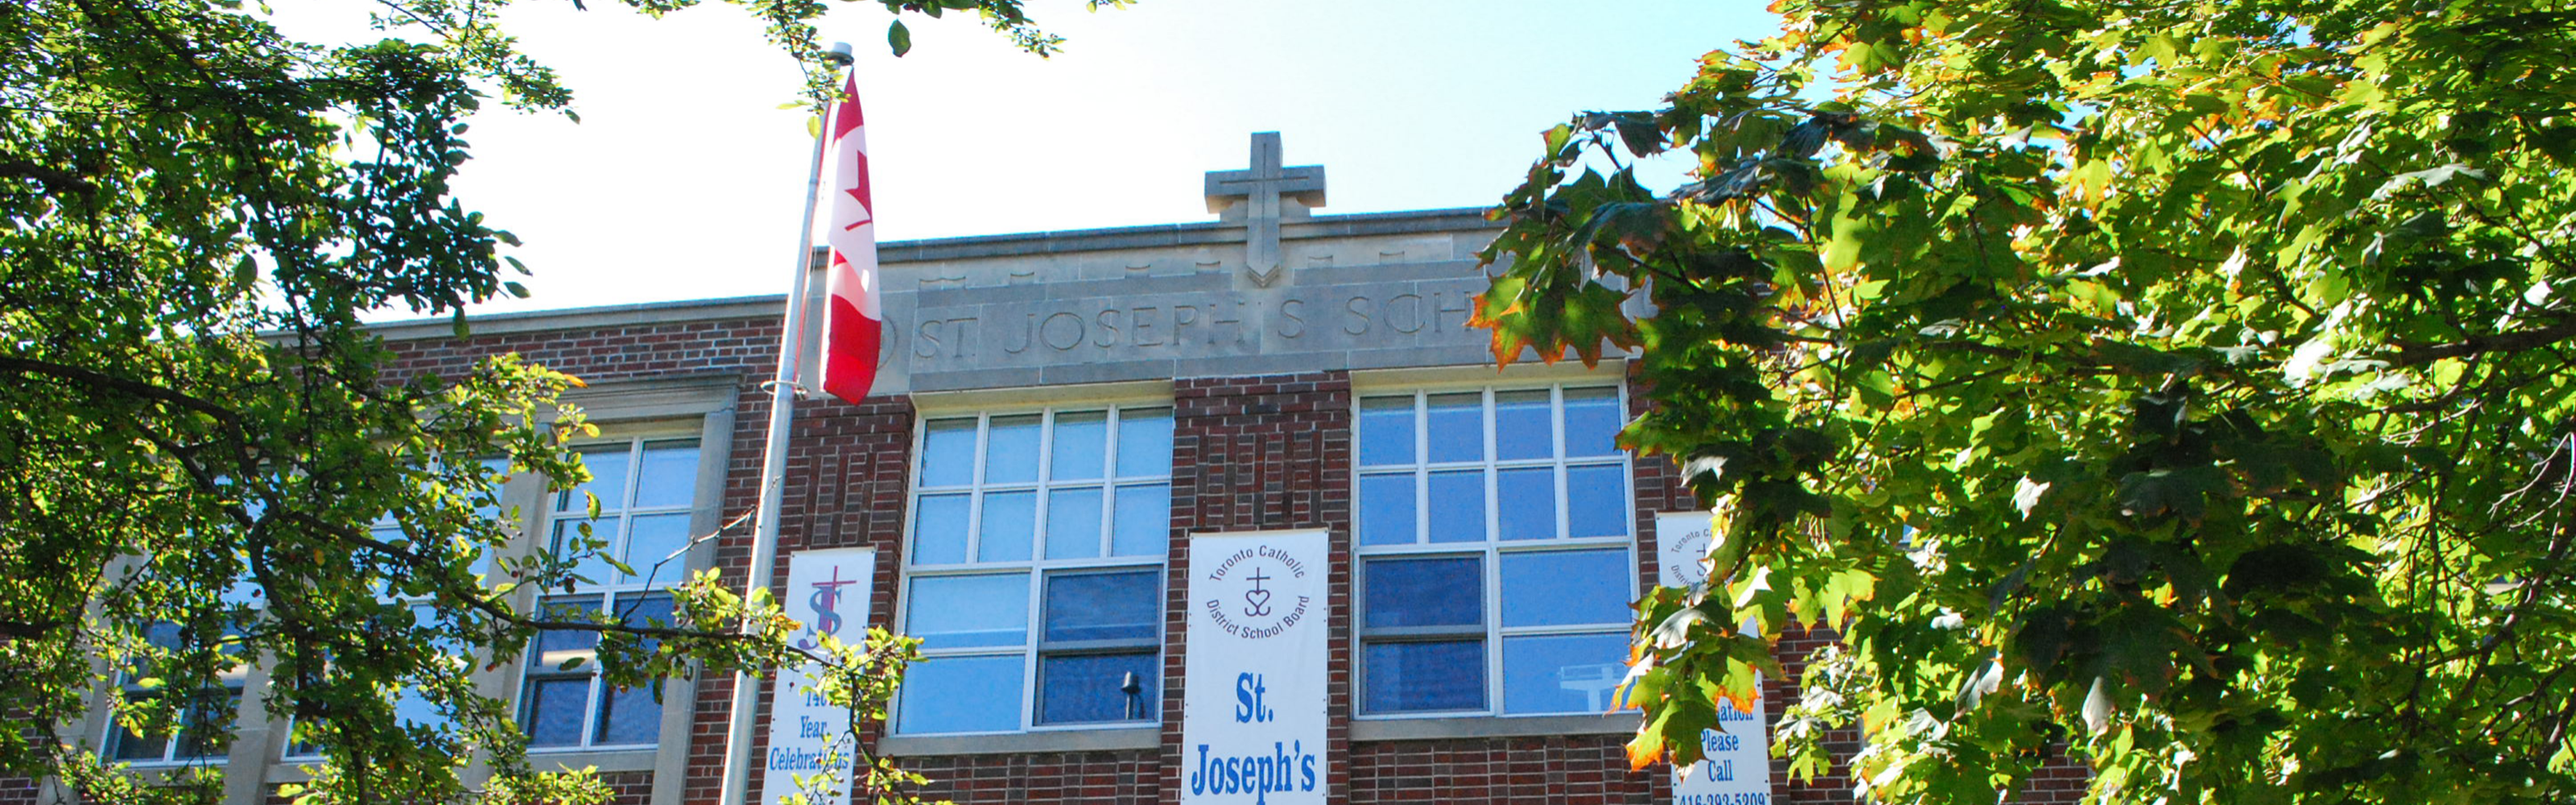 The front of the St. Joseph Catholic School building.